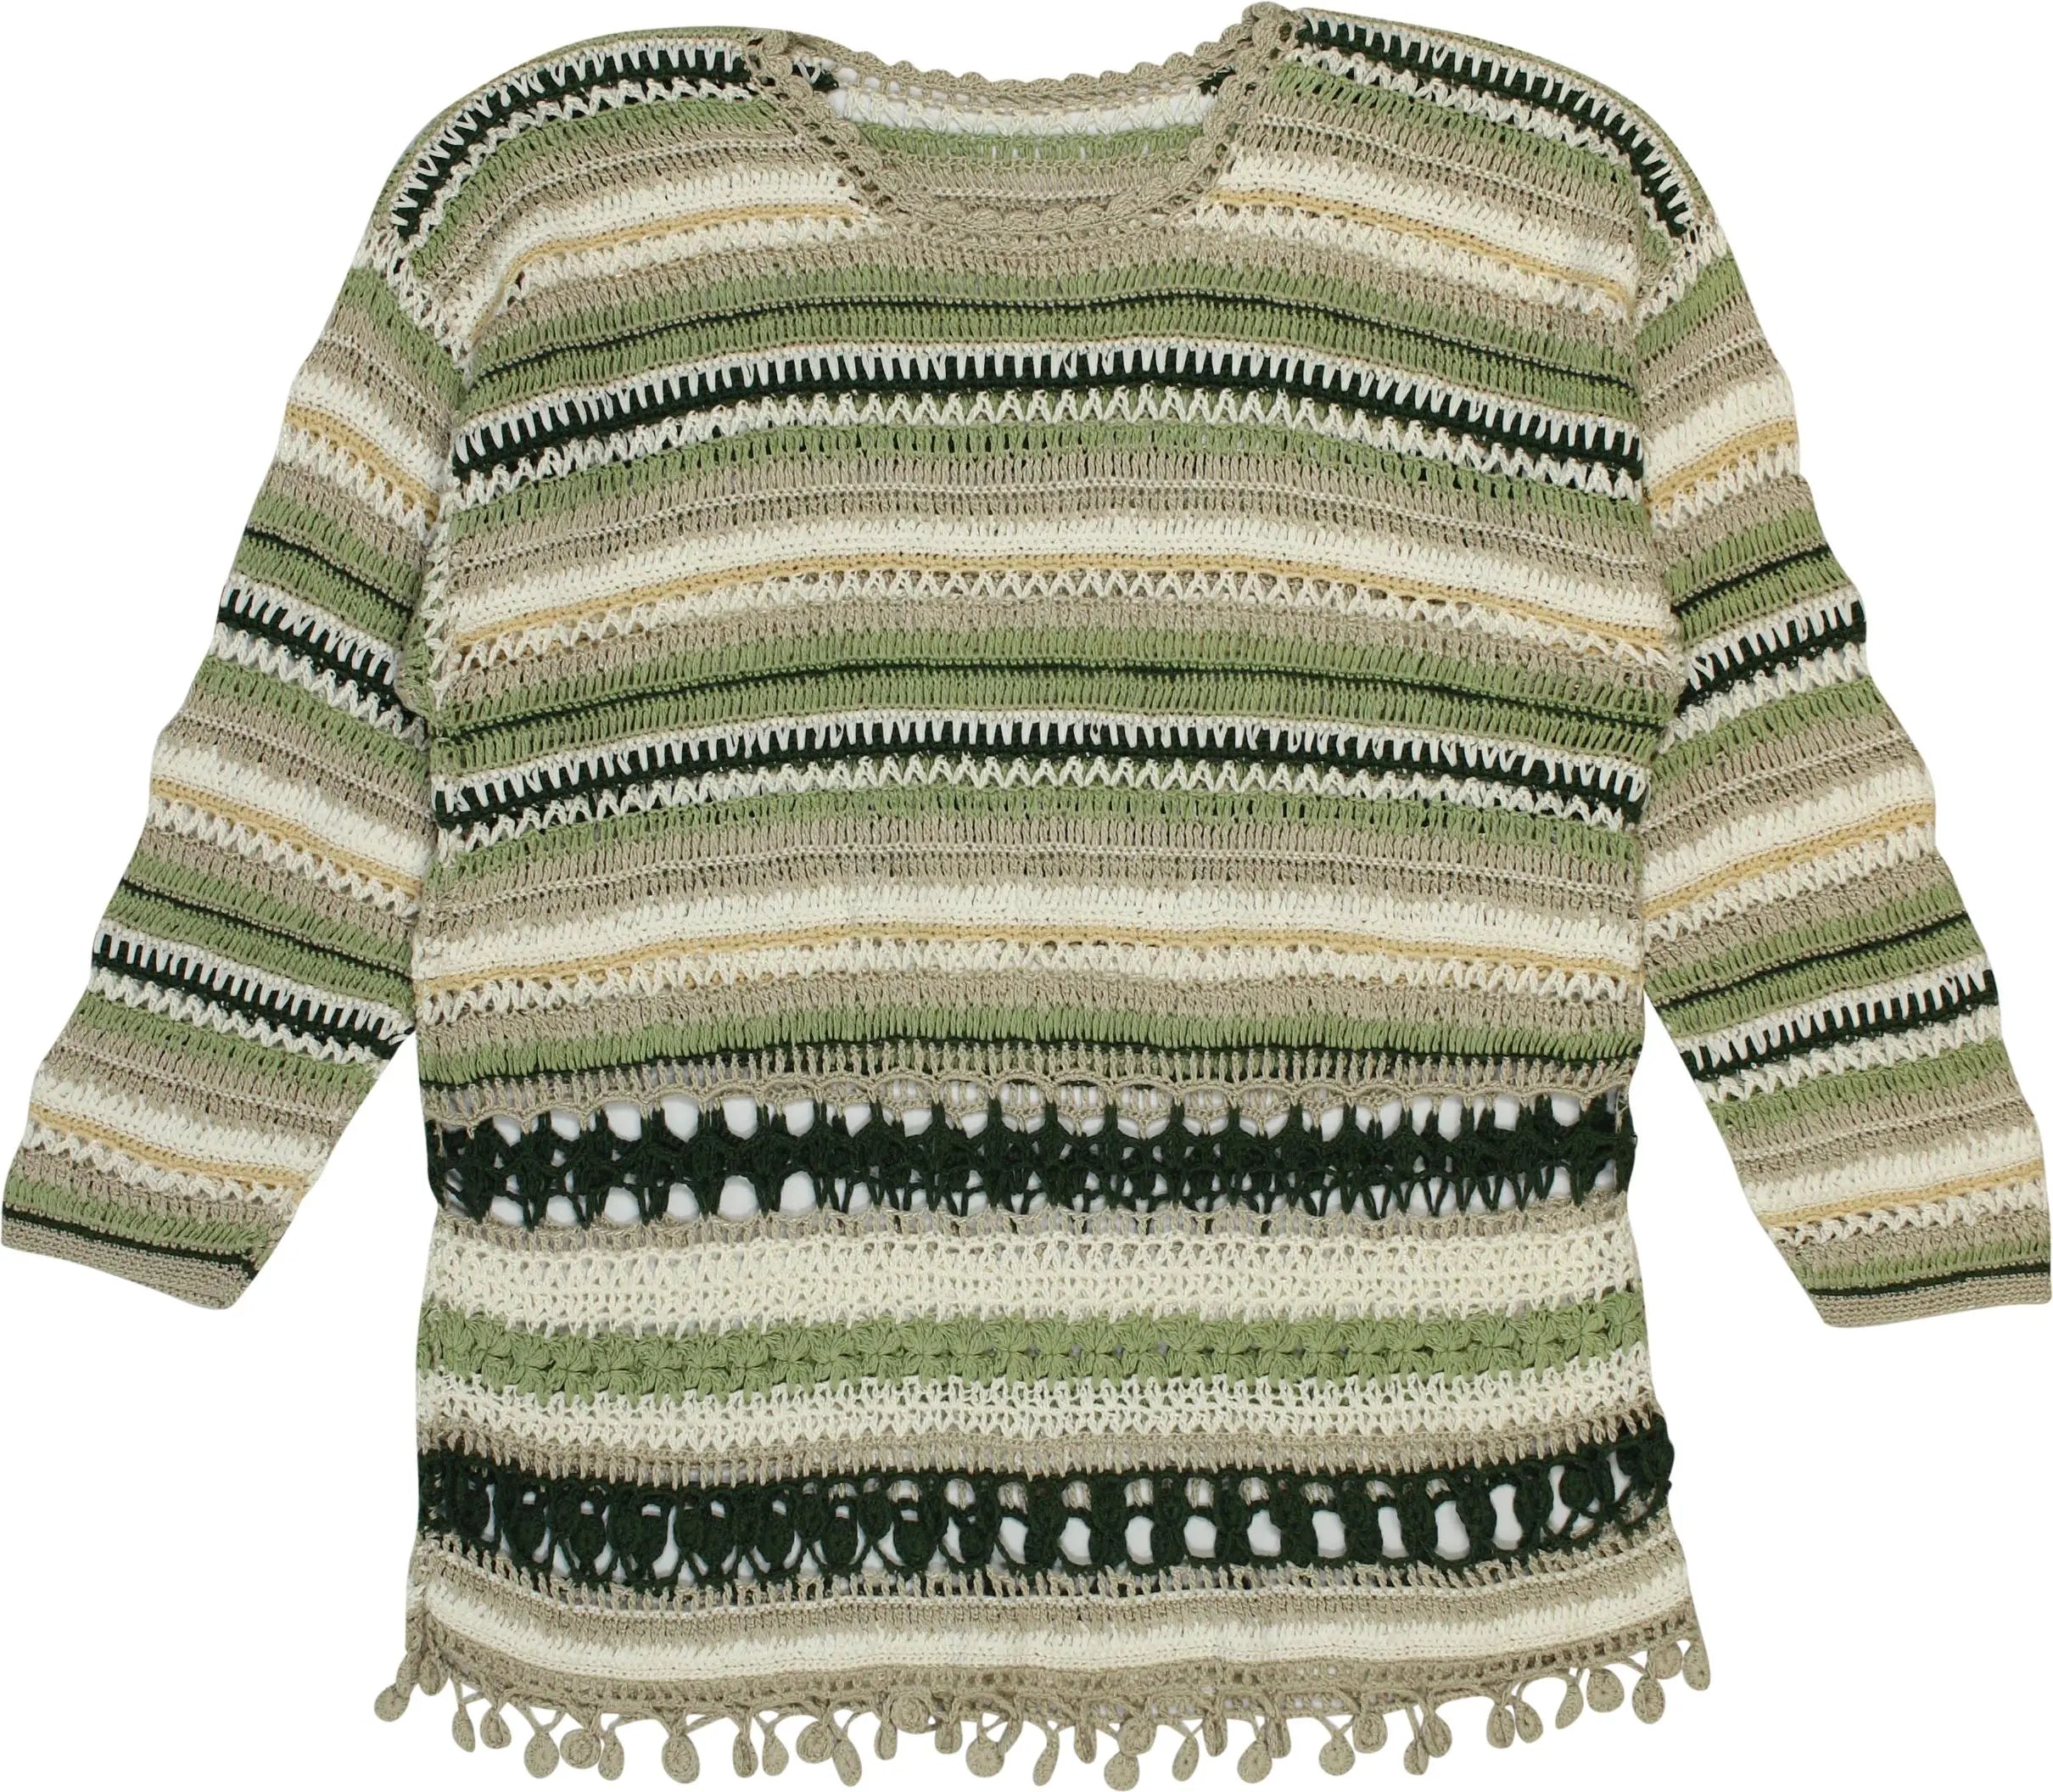 Handmade - Crochet Jumper- ThriftTale.com - Vintage and second handclothing